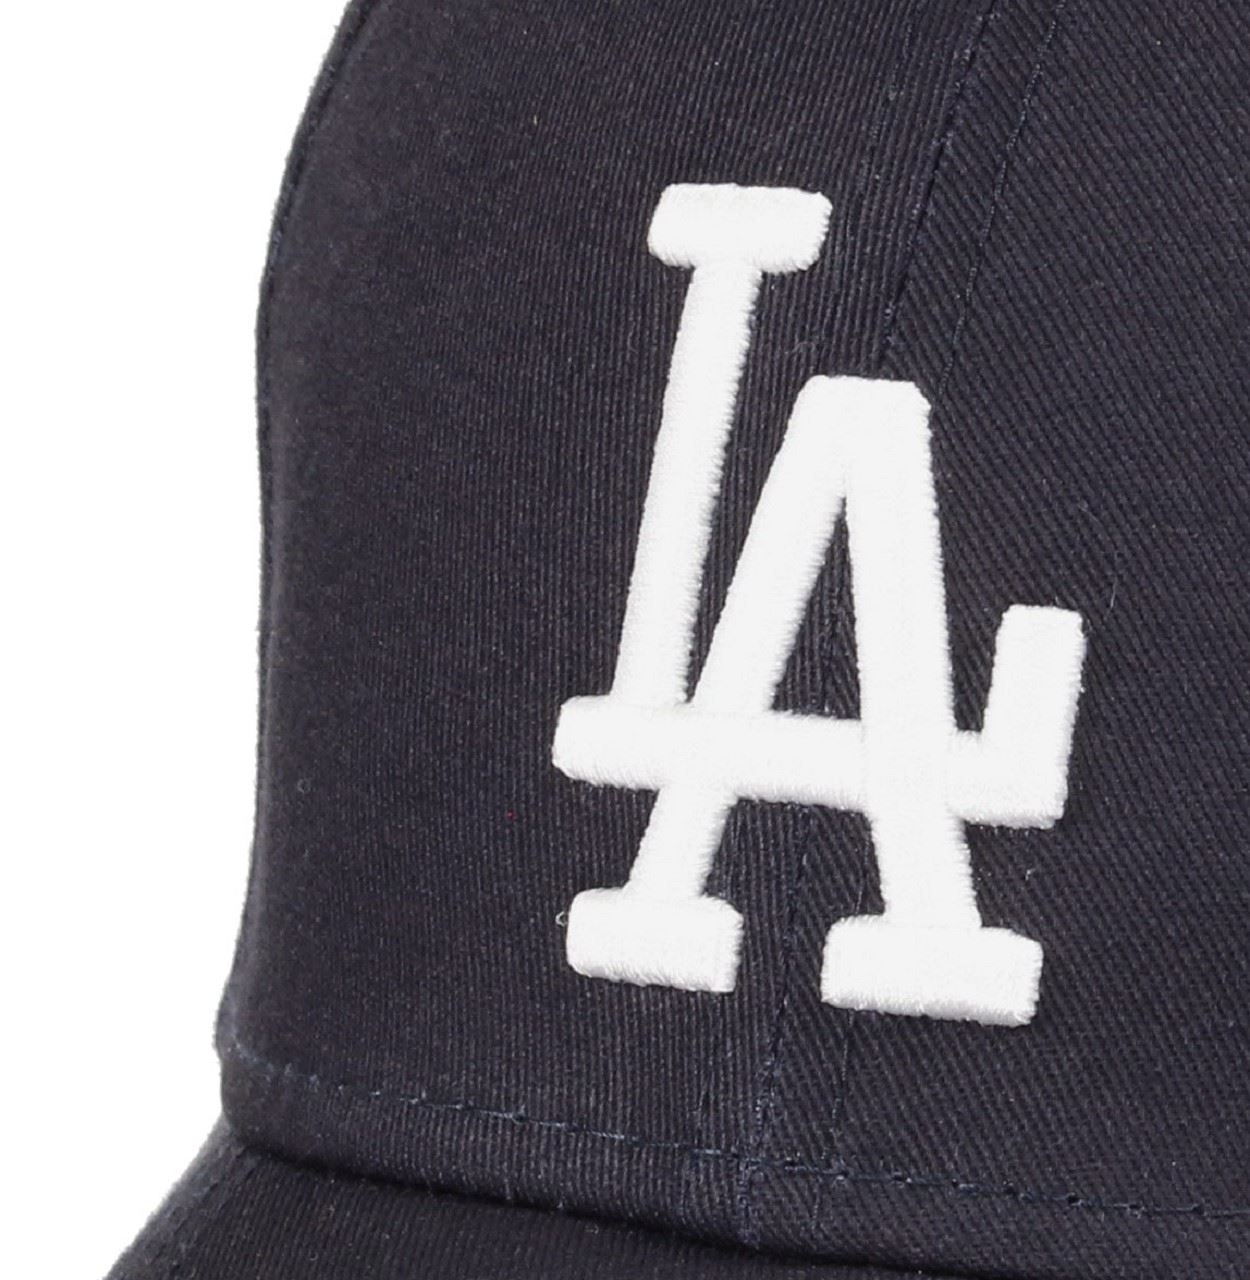 Los Angeles Dodgers MLB Rear Logo Navy / White 9Forty Adjustable Cap New Era